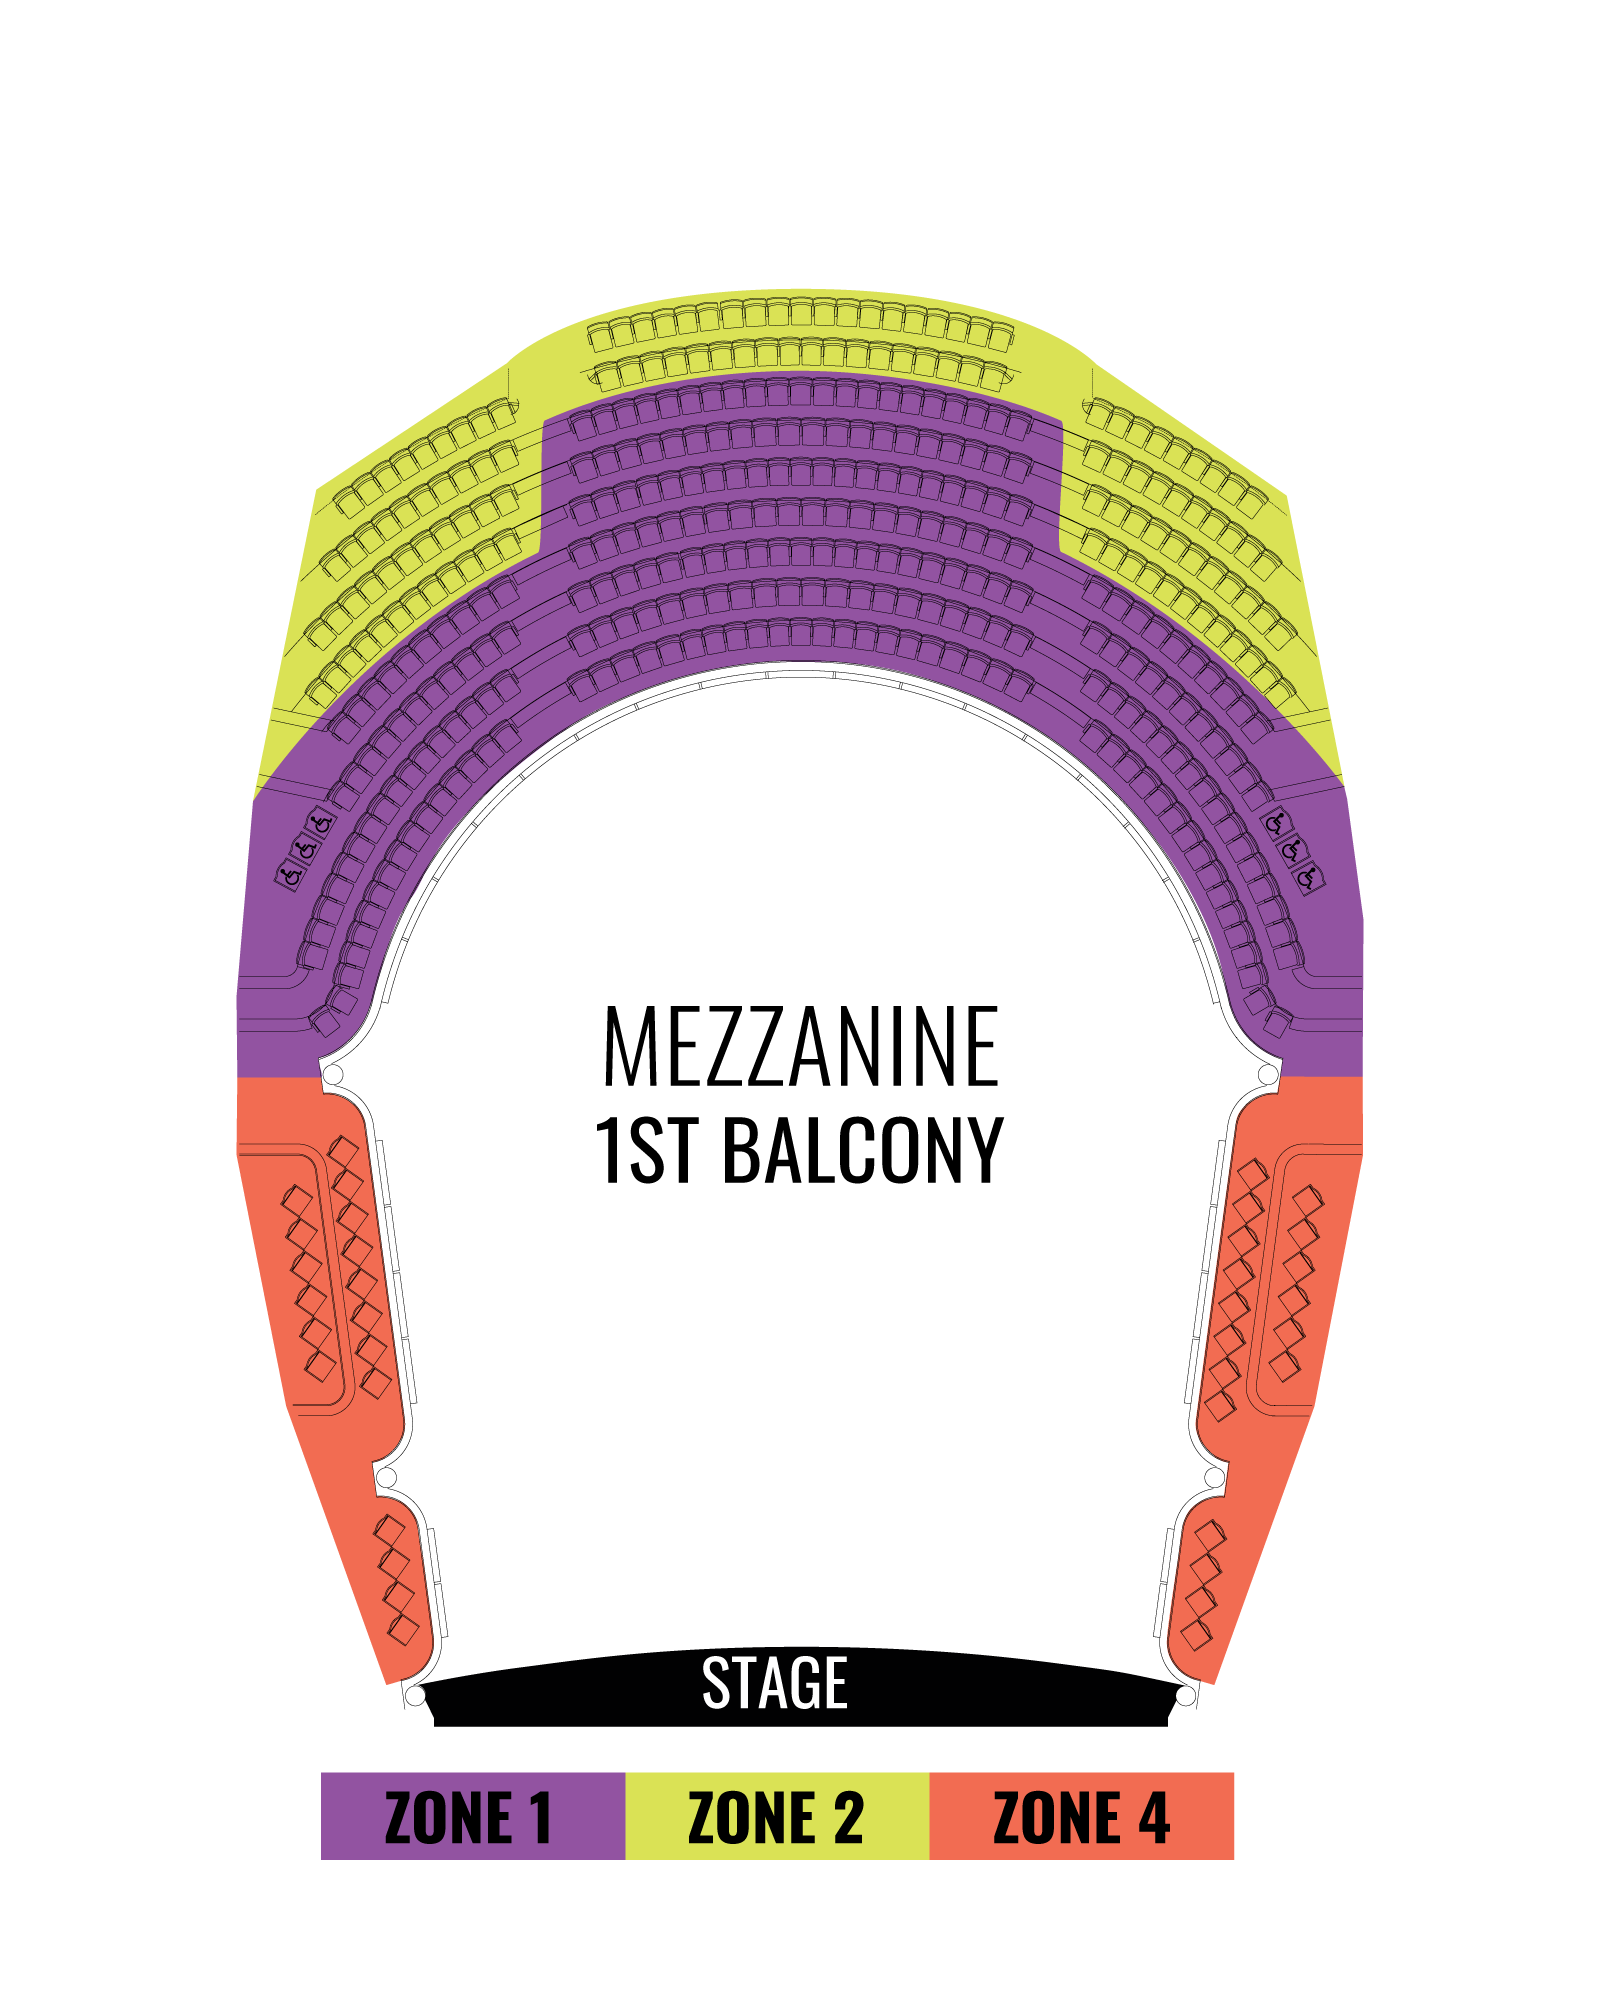 Mezzanine Seating Map